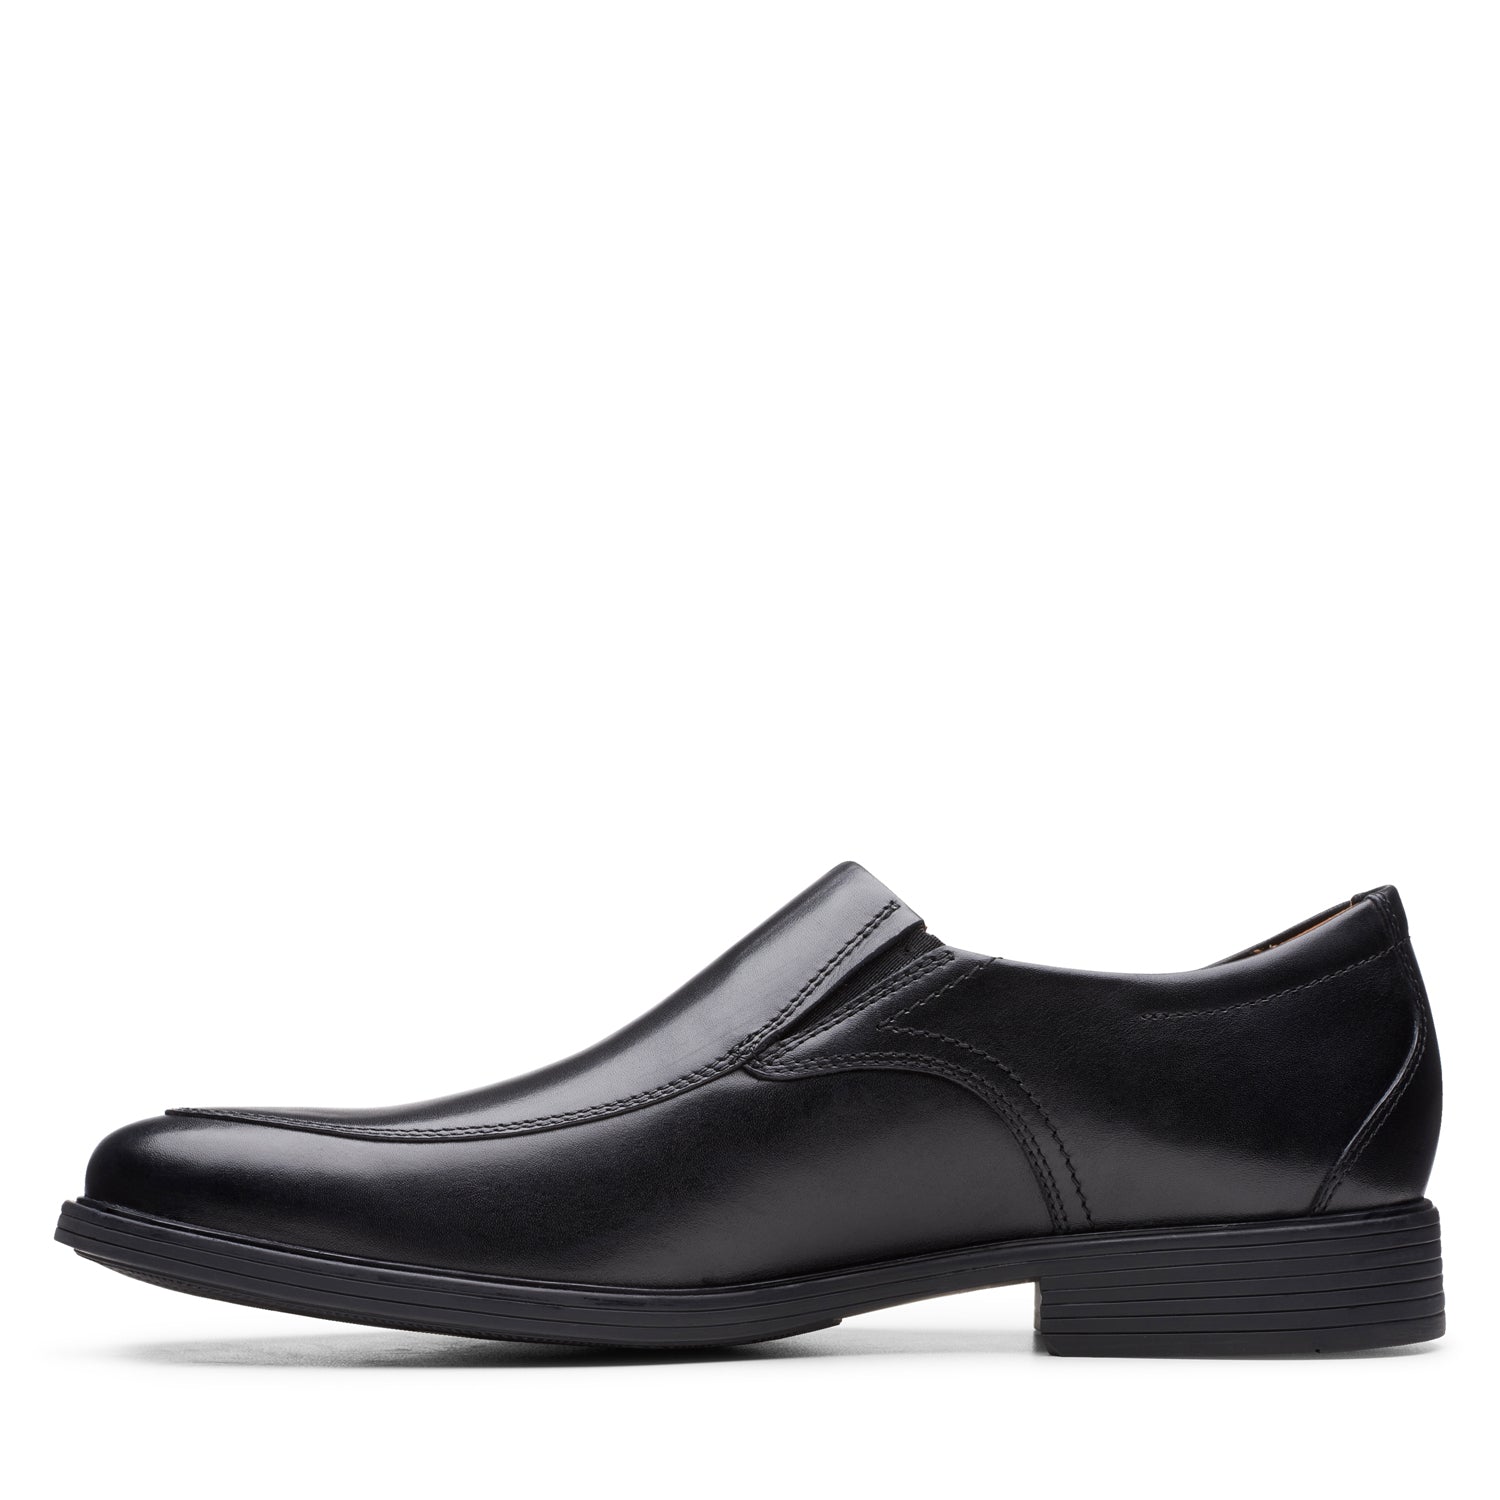 Shop Whiddon Step - Men's Black Shoes | Clarks